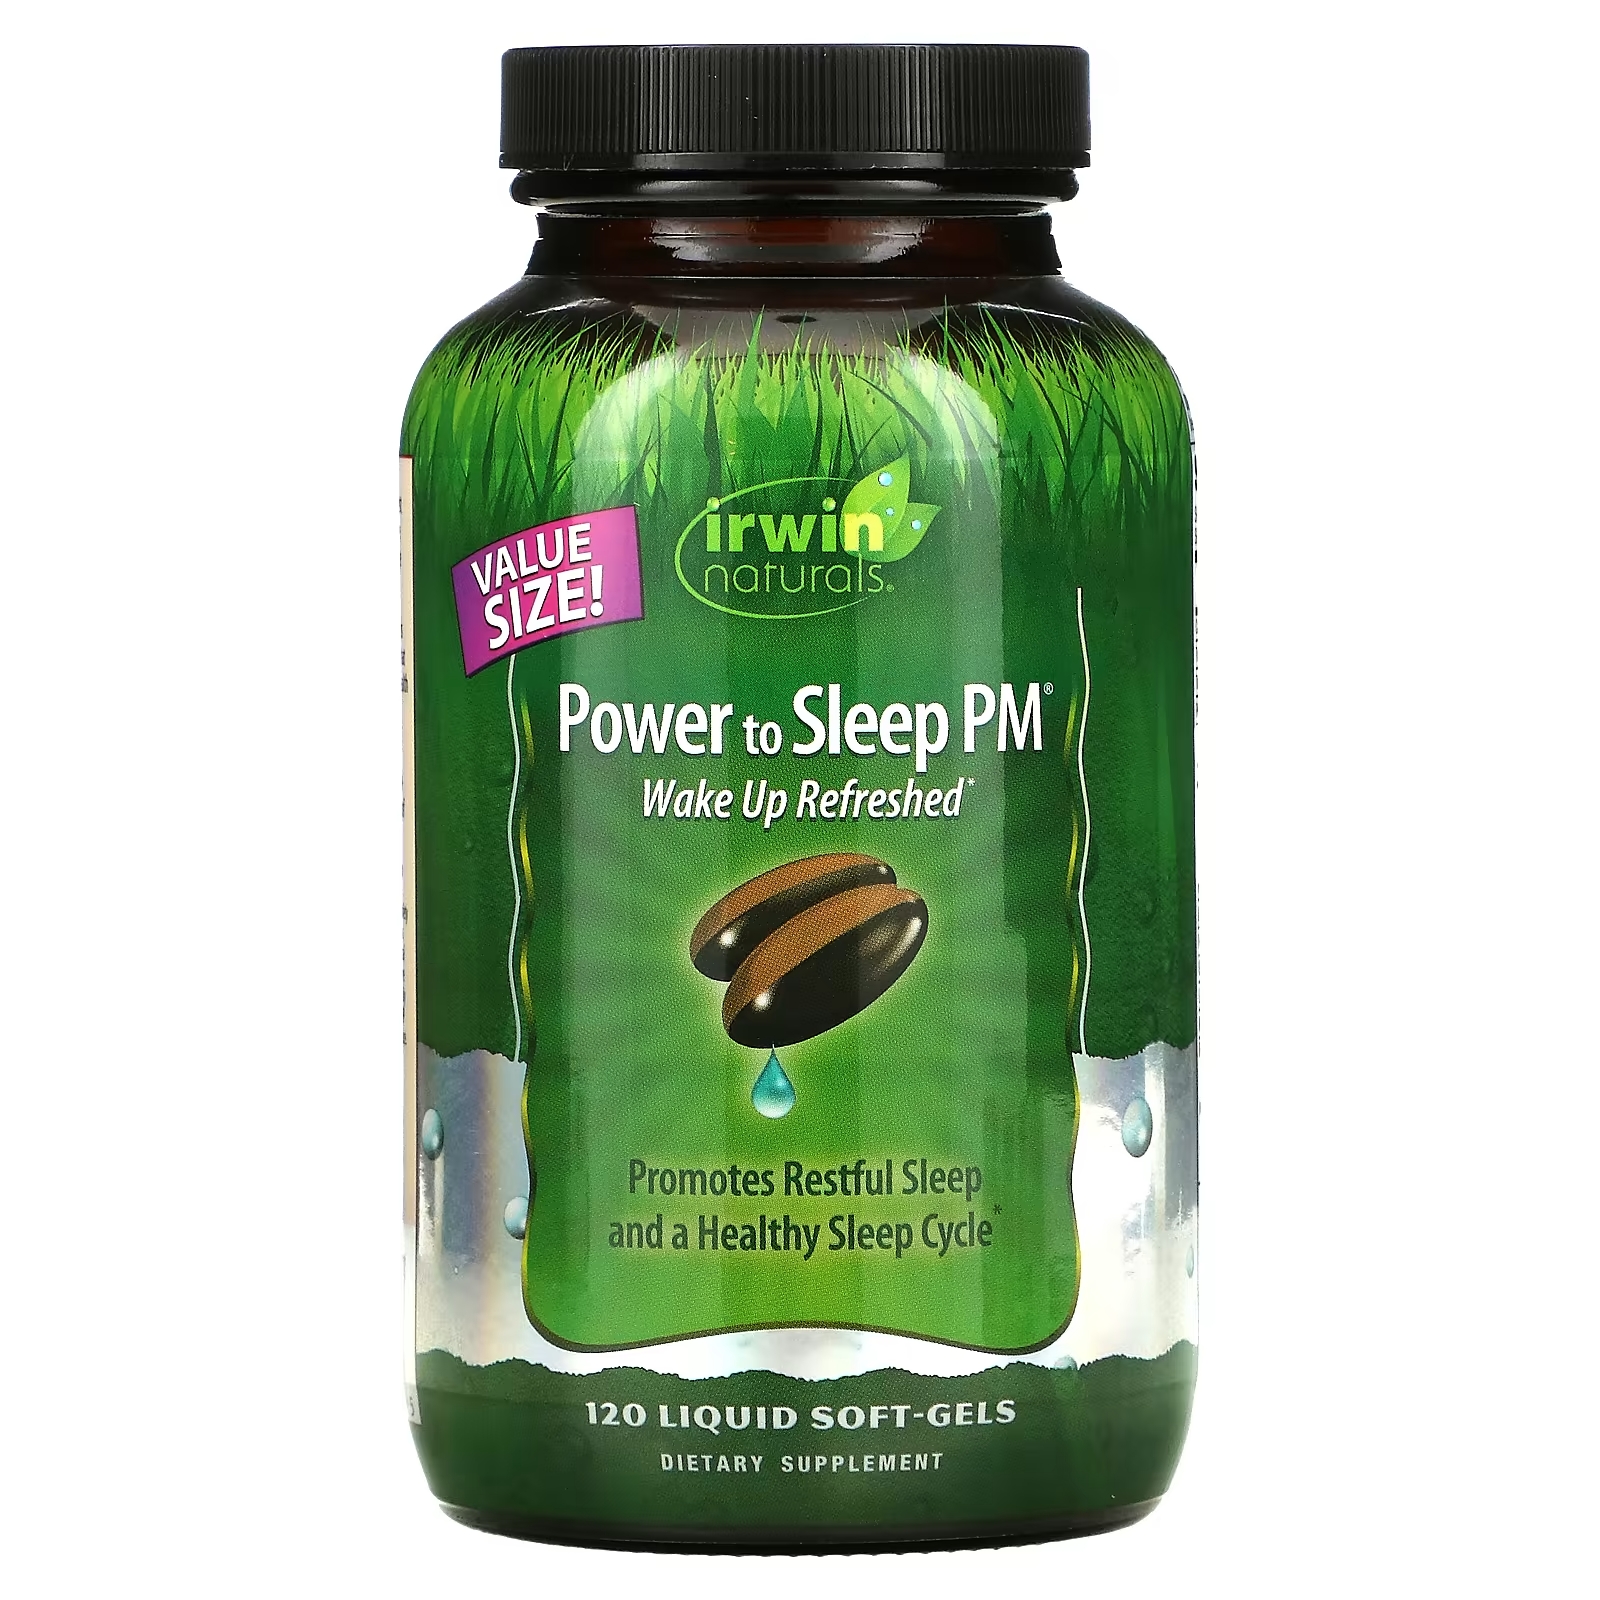 Снотворное Irwin Naturals Power to Sleep, 120 мягких капсул пищевая добавка irwin naturals power to sleep pm 50 мягких капсул с жидкостью